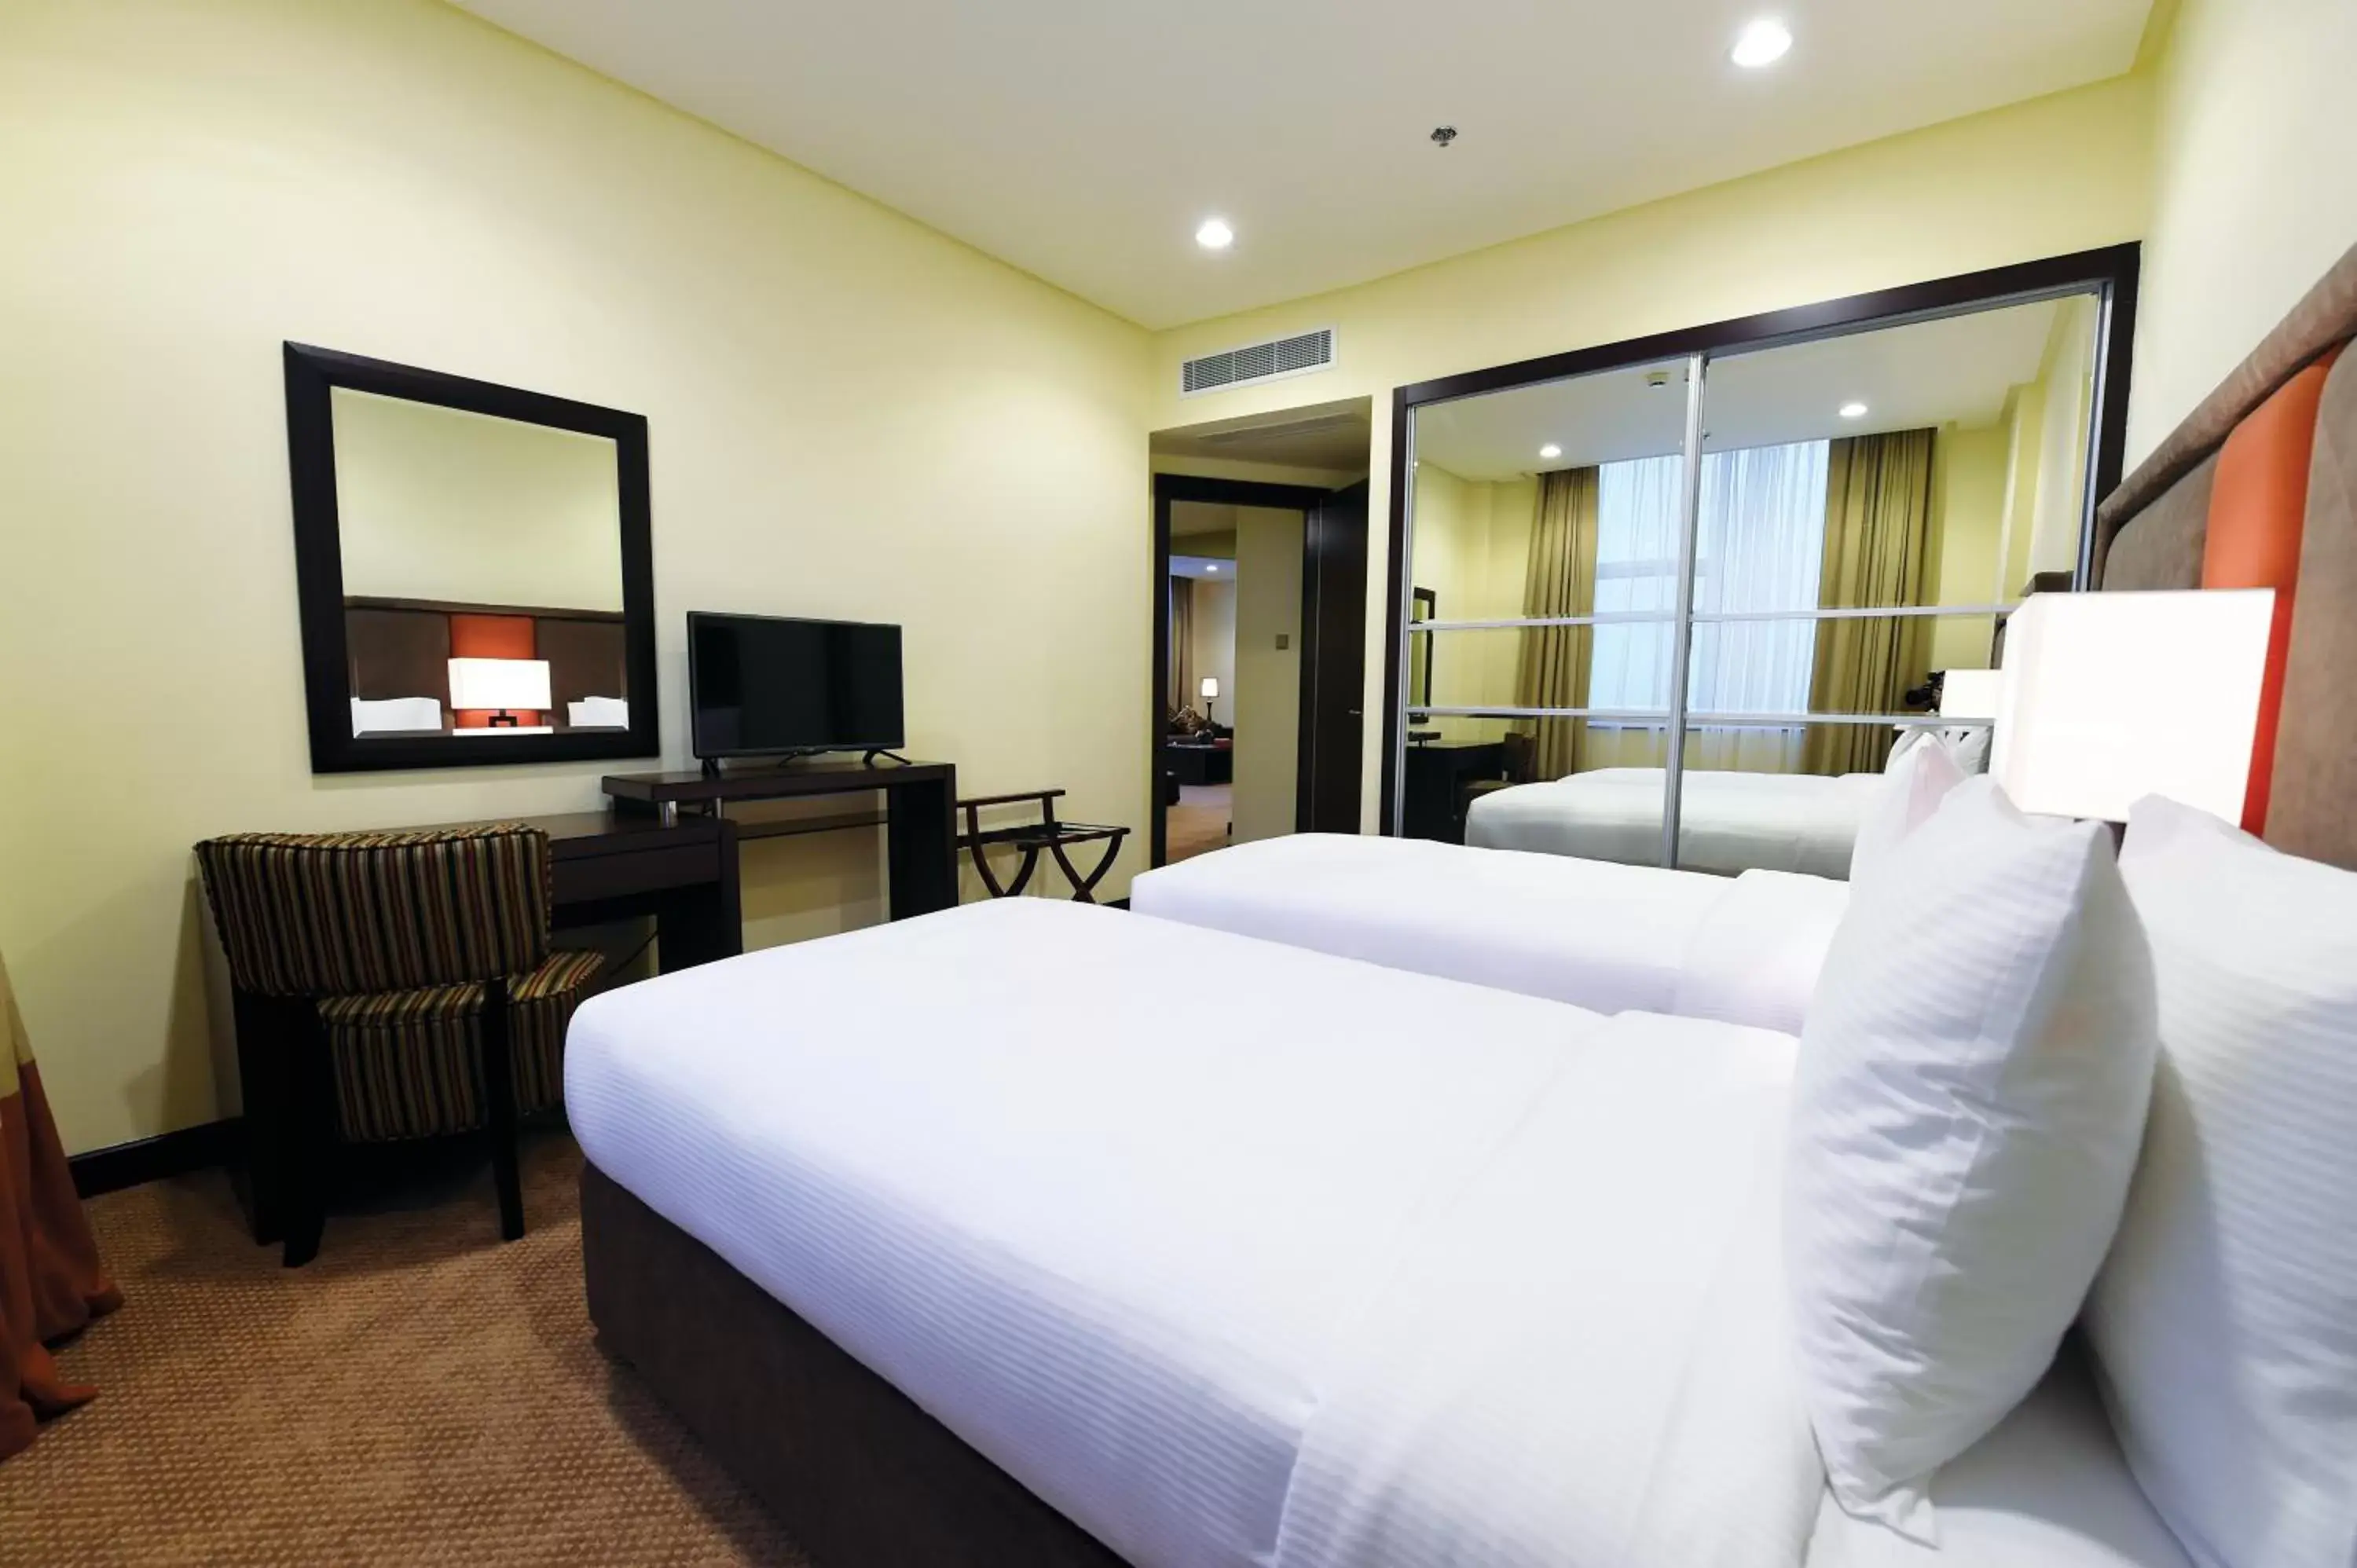 Bed, Room Photo in Orange Suites Hotel